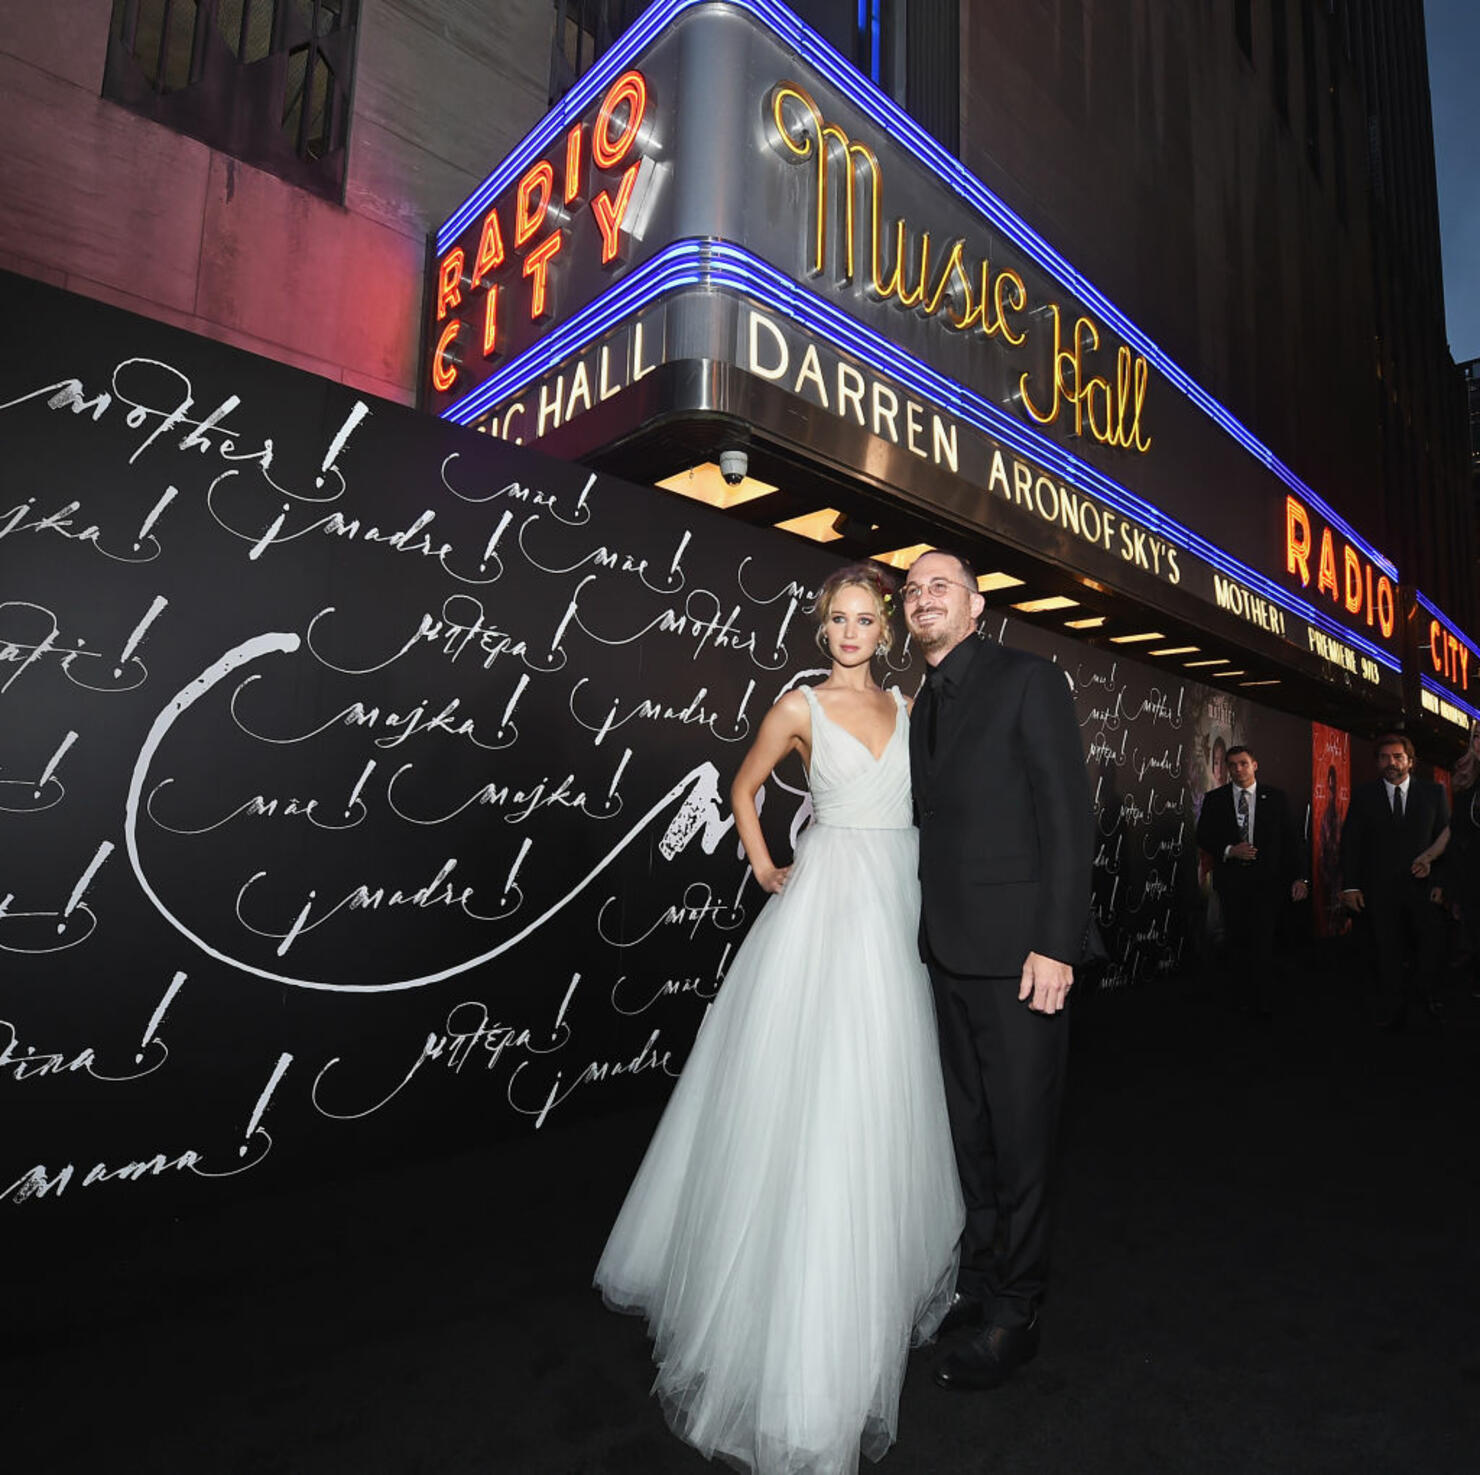 Jennifer Lawrence & Darren Aronofsky